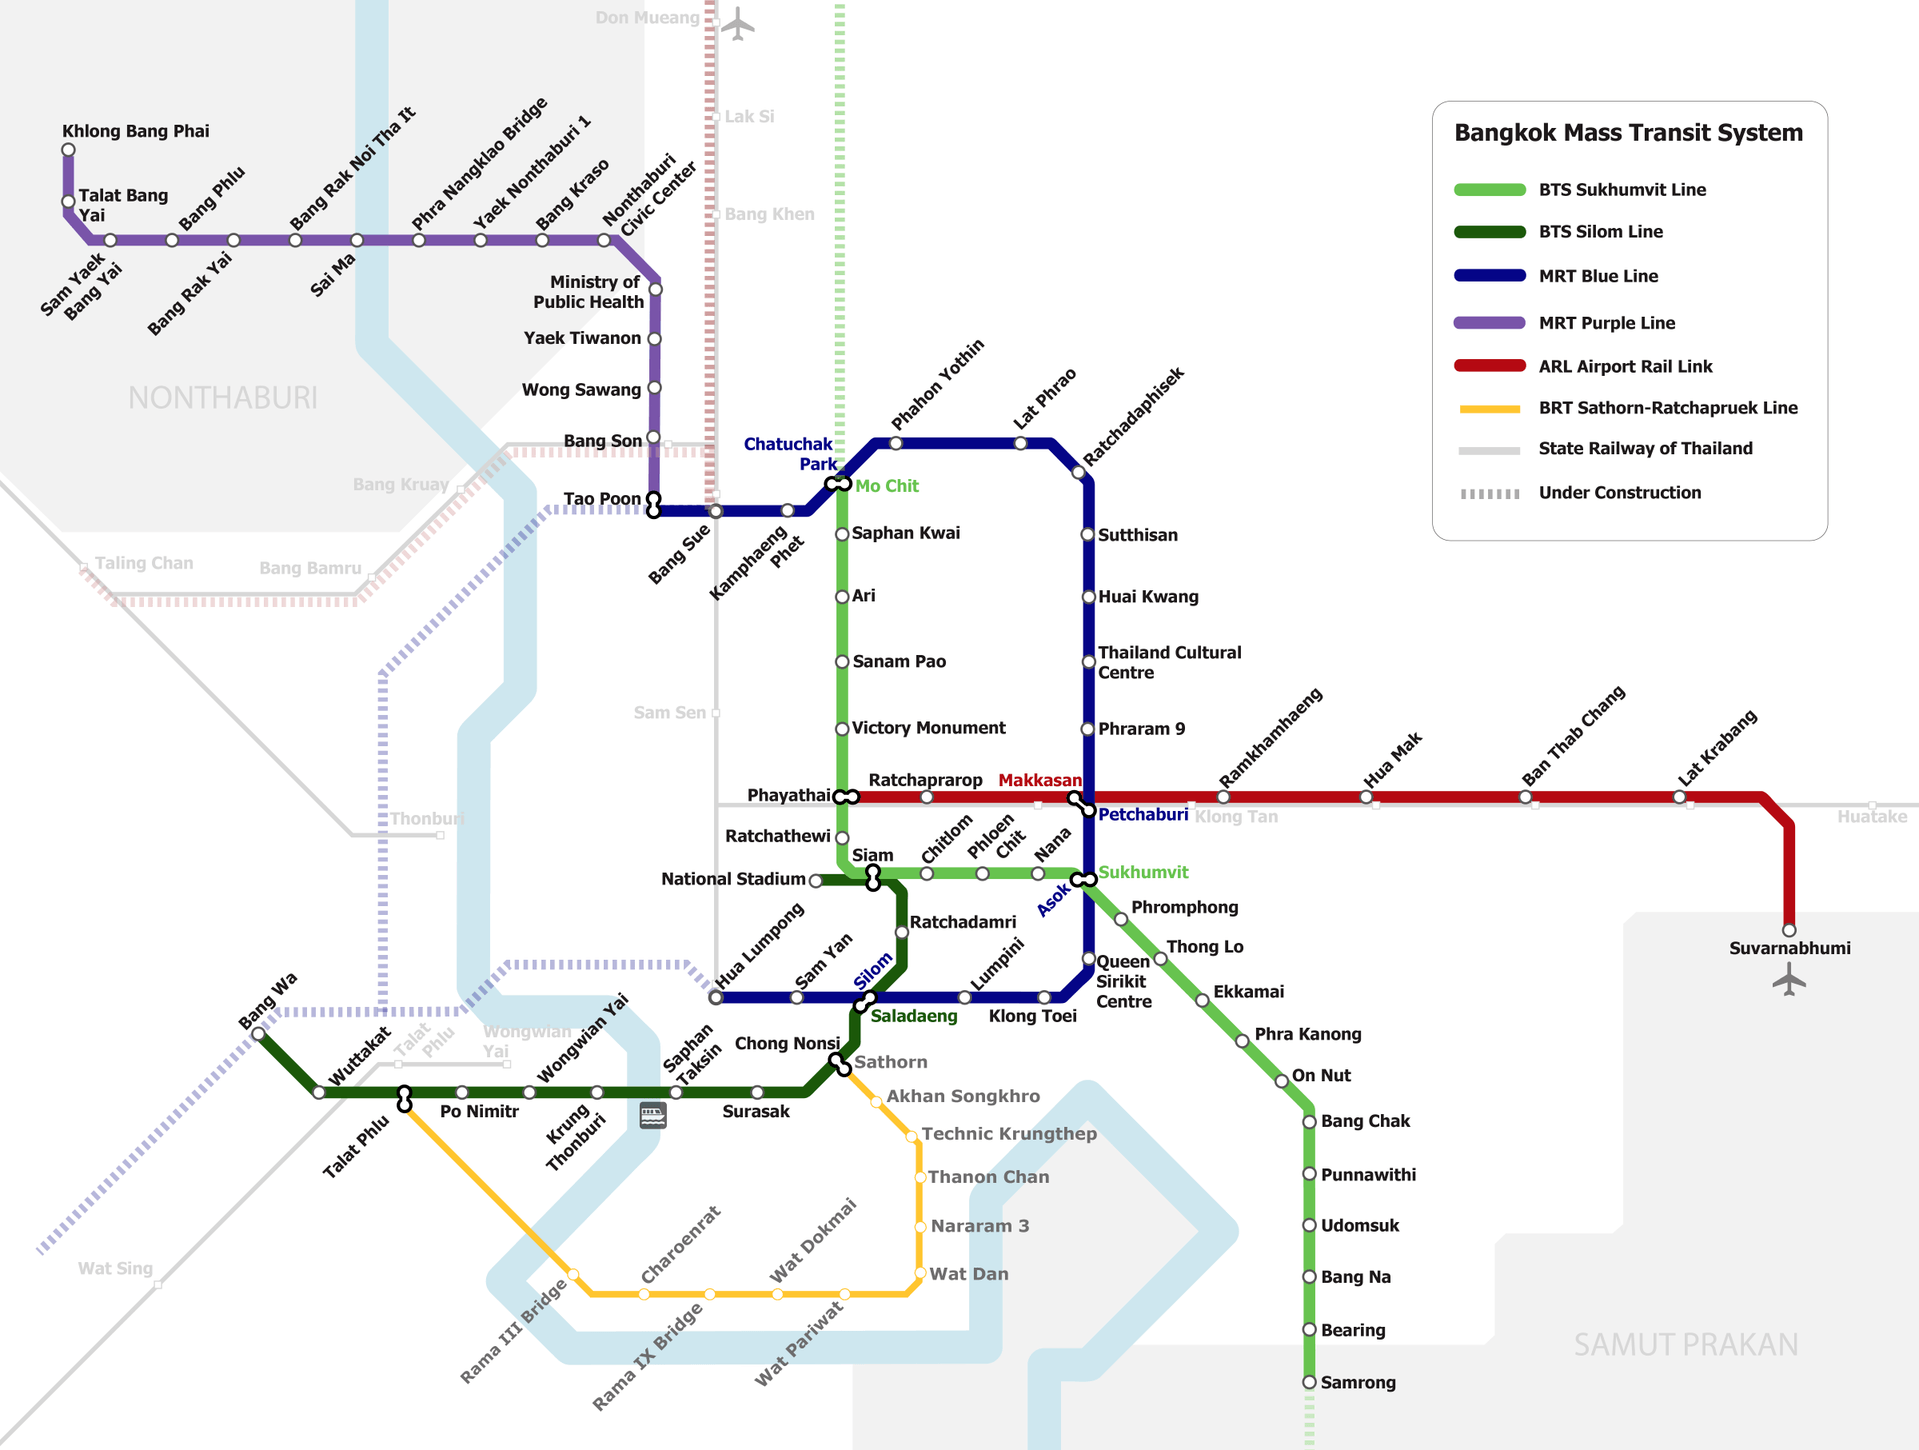 How to get around Bangkok - Public Transportation Map